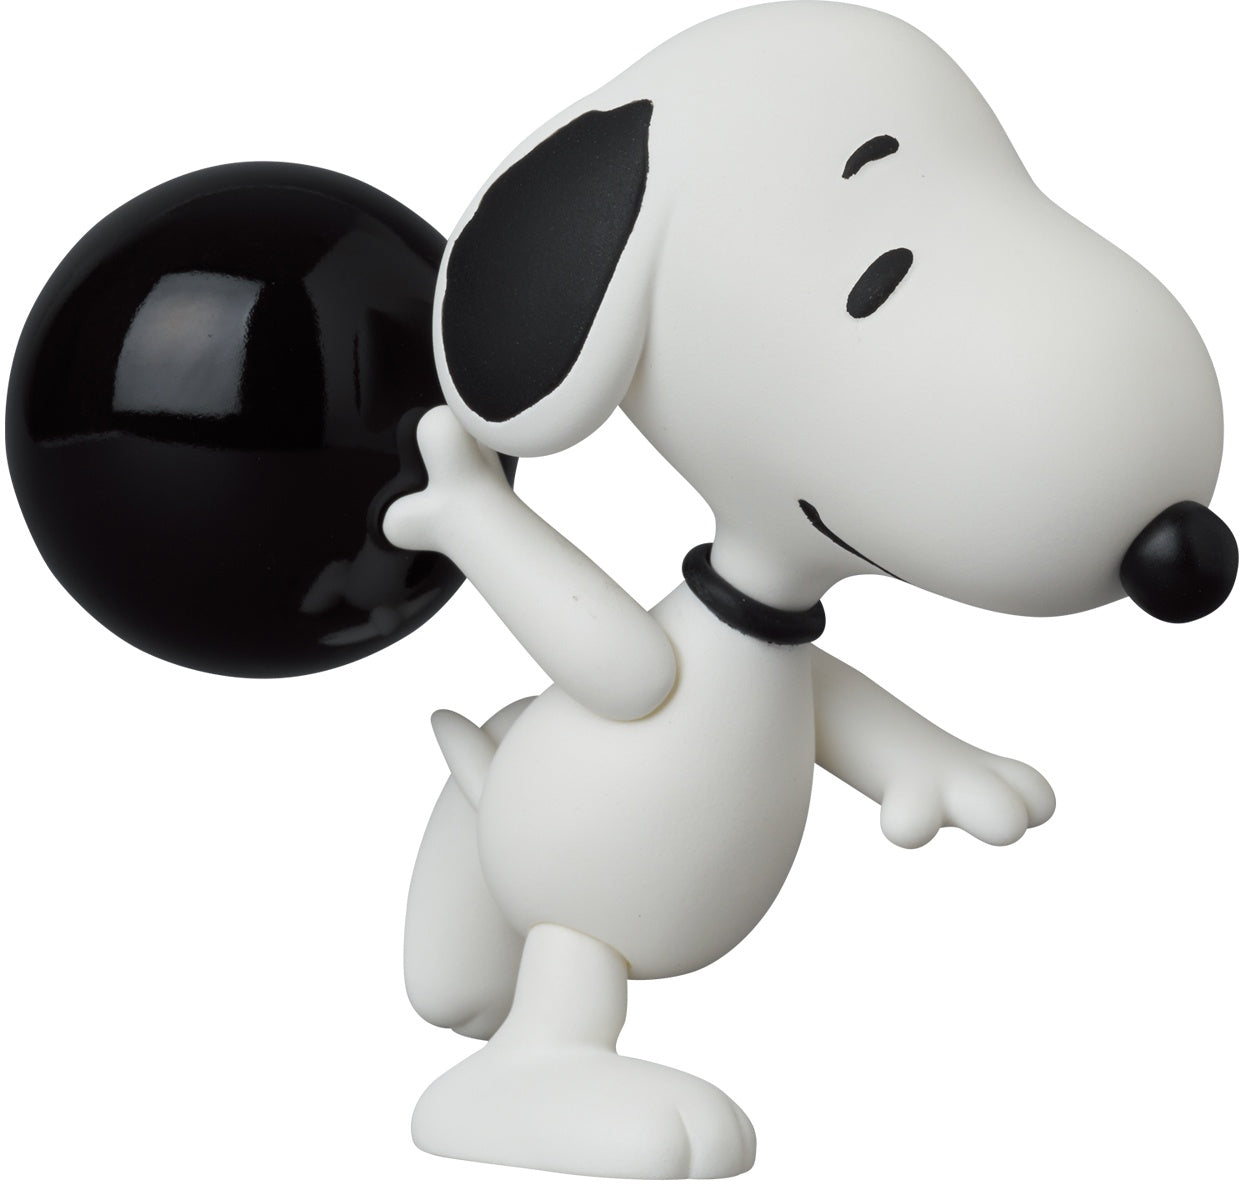 Medicom - Ultra Detail Figure No. 721 - Bowler Snoopy - Marvelous Toys